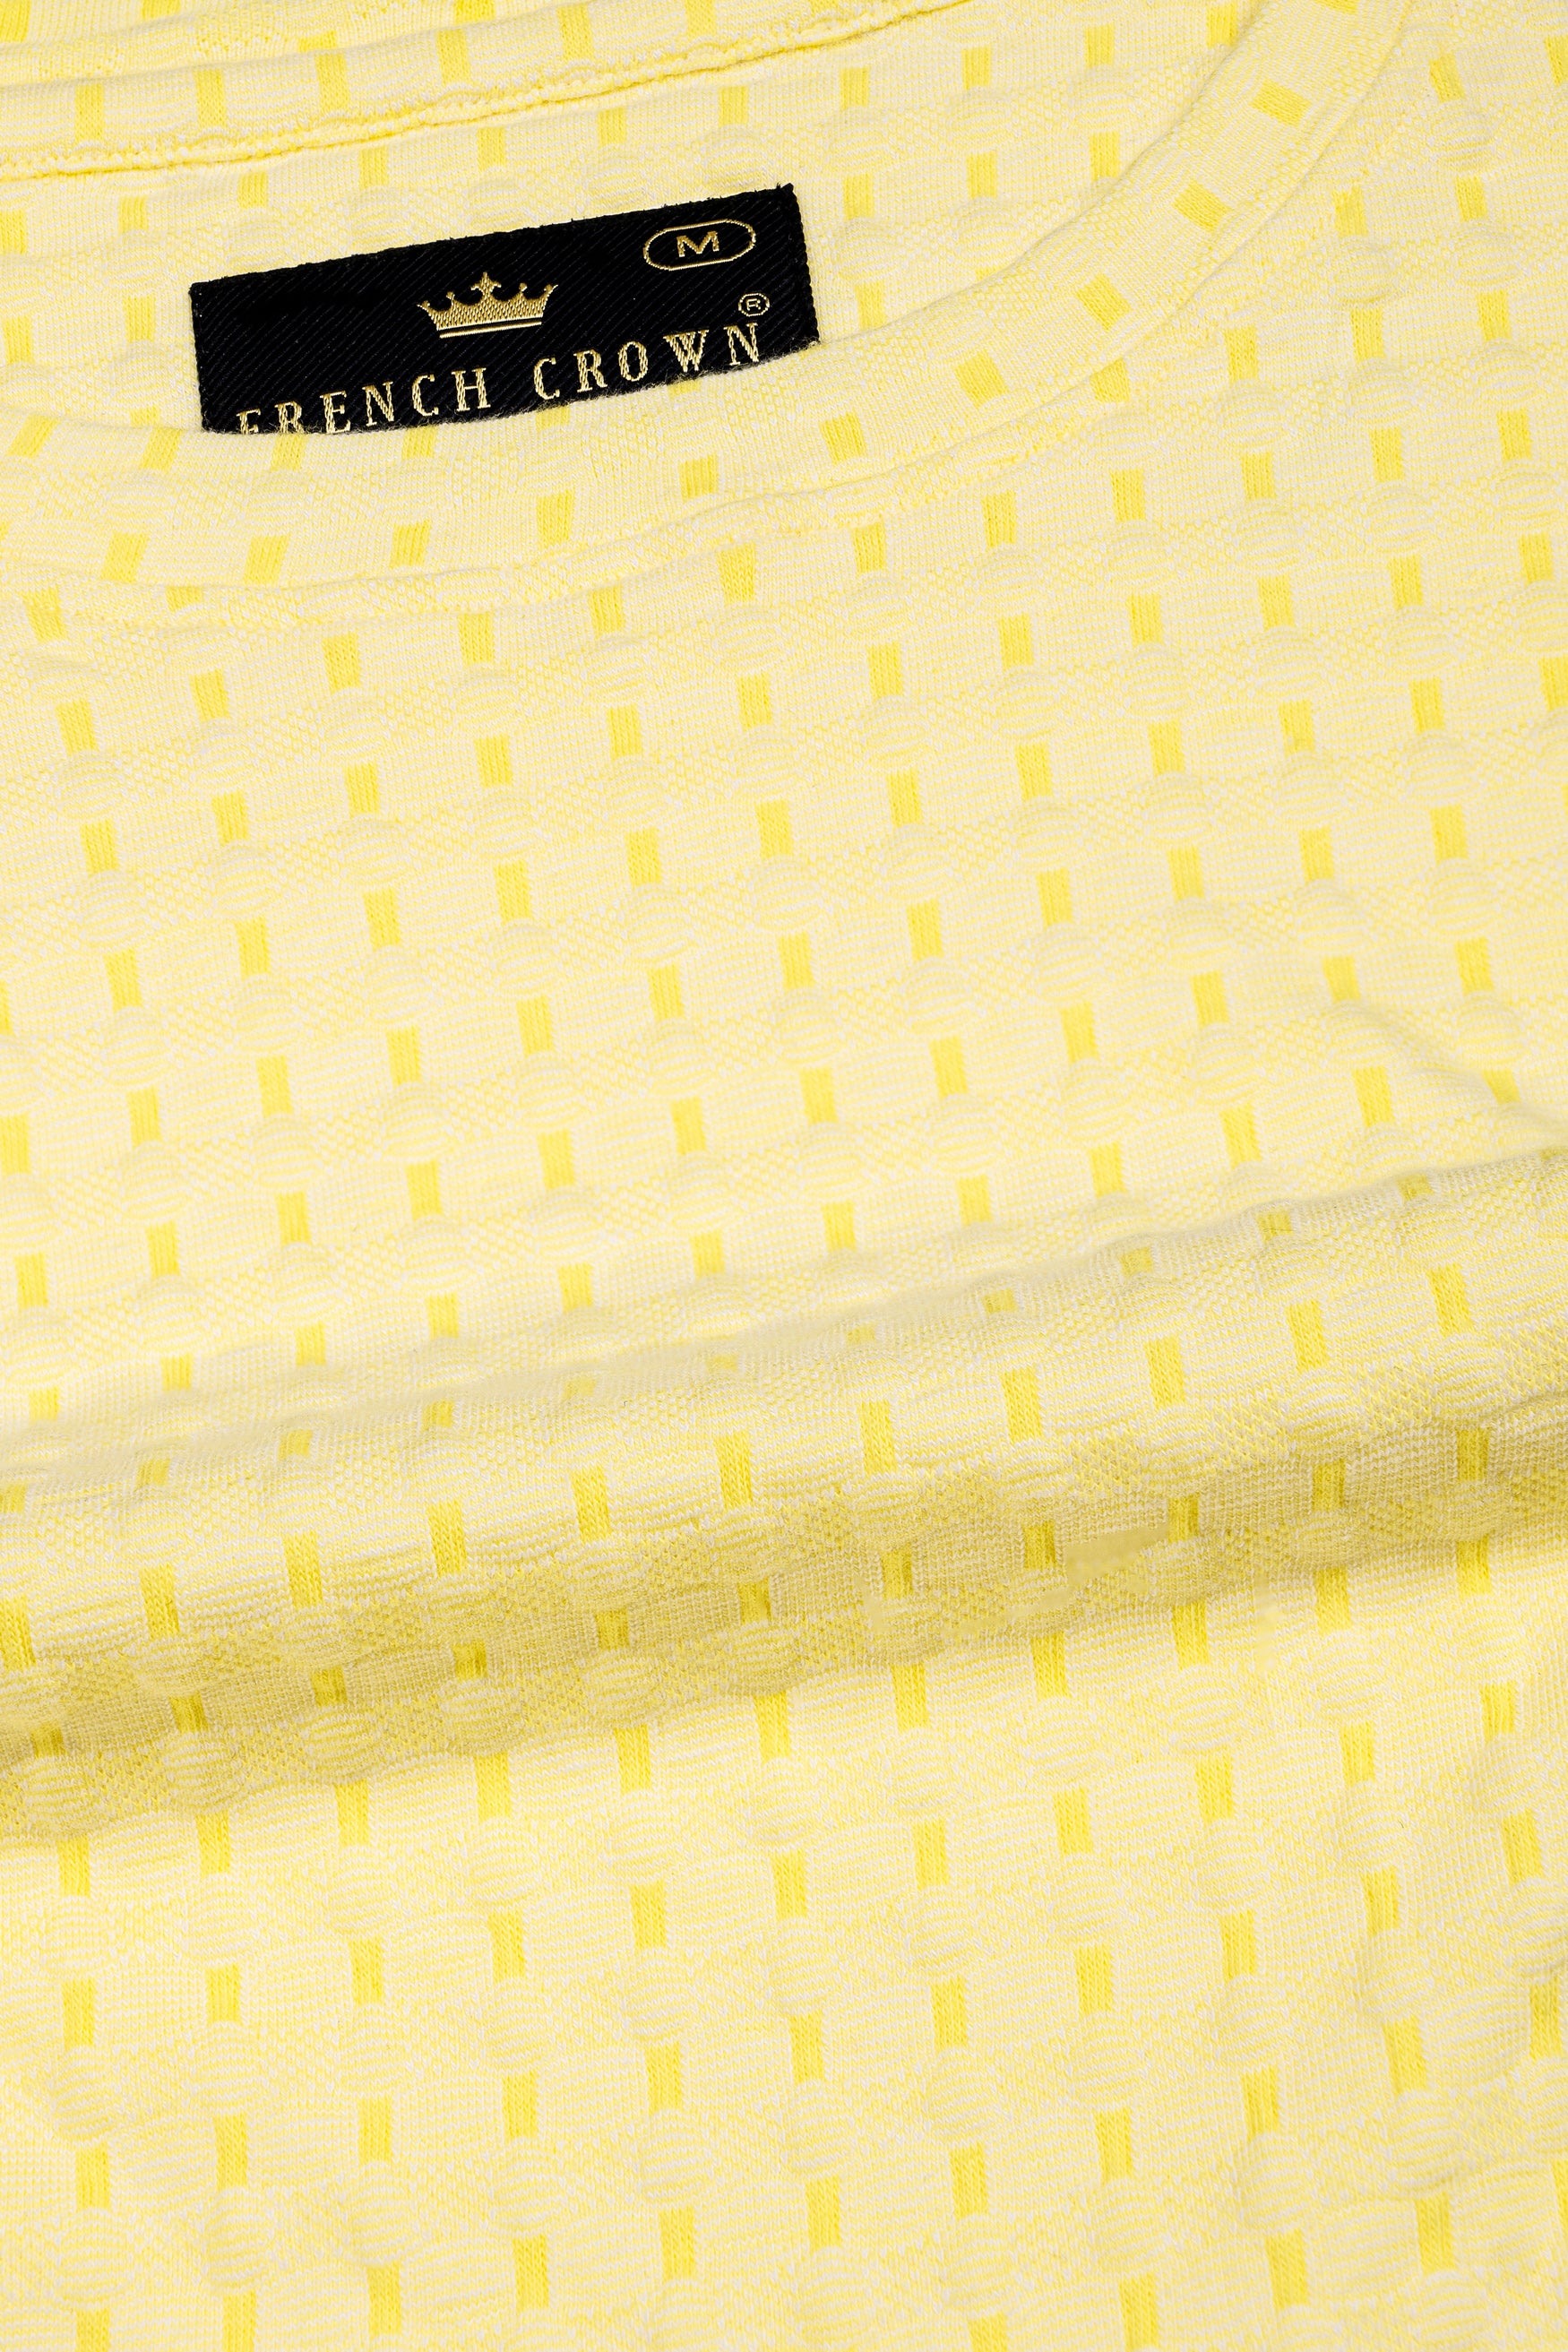 Sandwisp yellow Jacquard Textured Flat-Knit Premium Cotton T-shirt